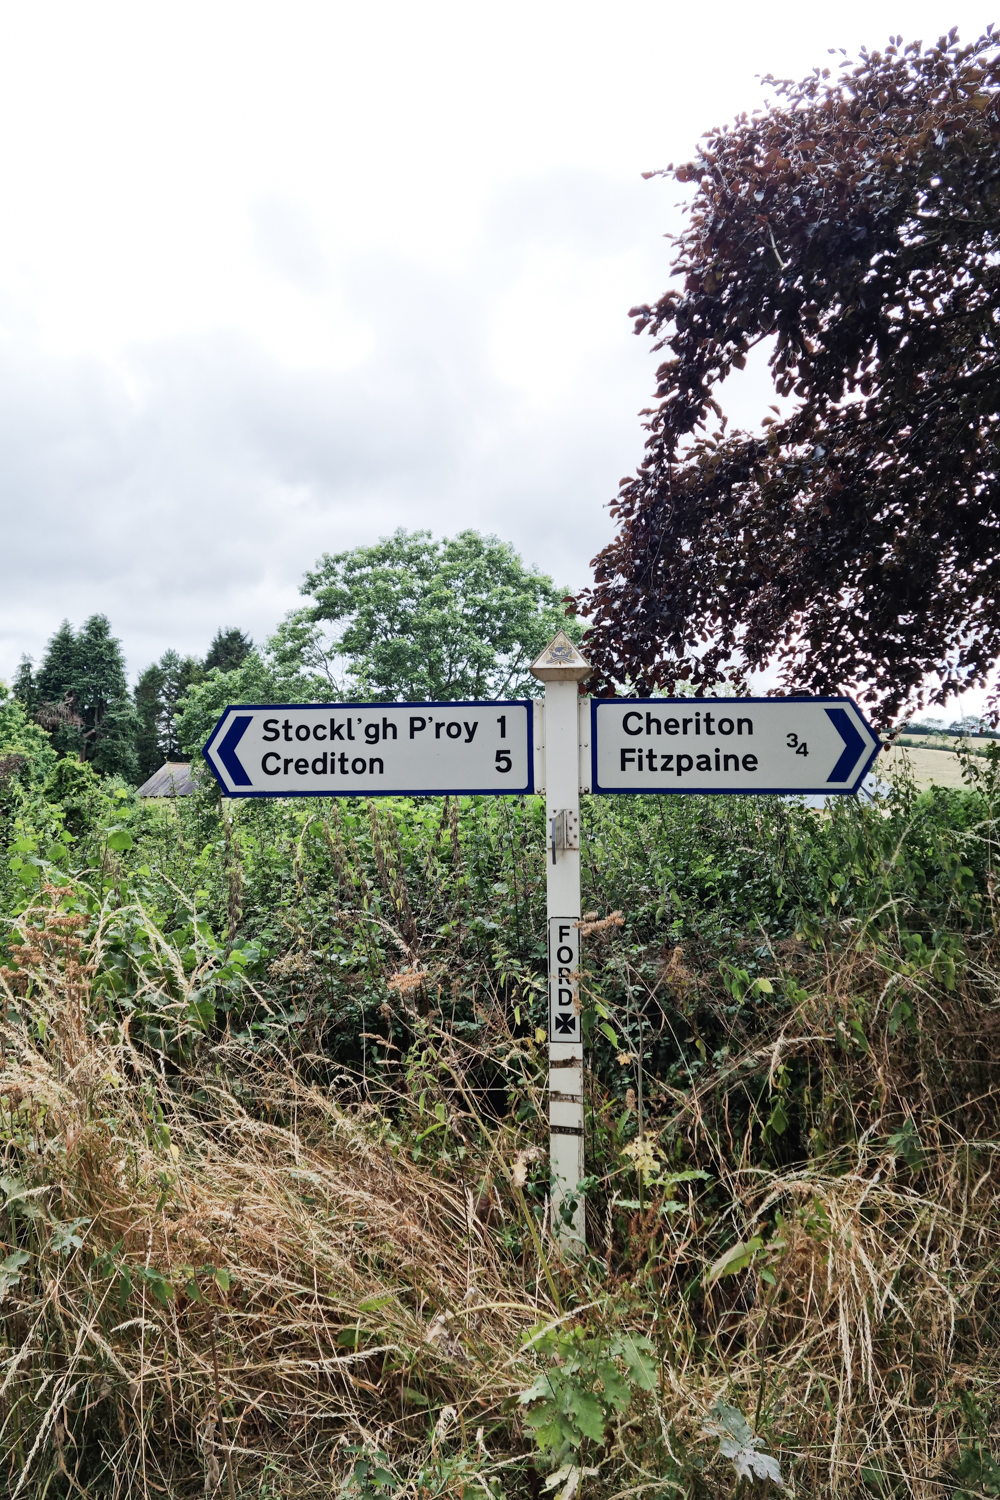 Road signs to Crediton and Cheriton Fitzpaine